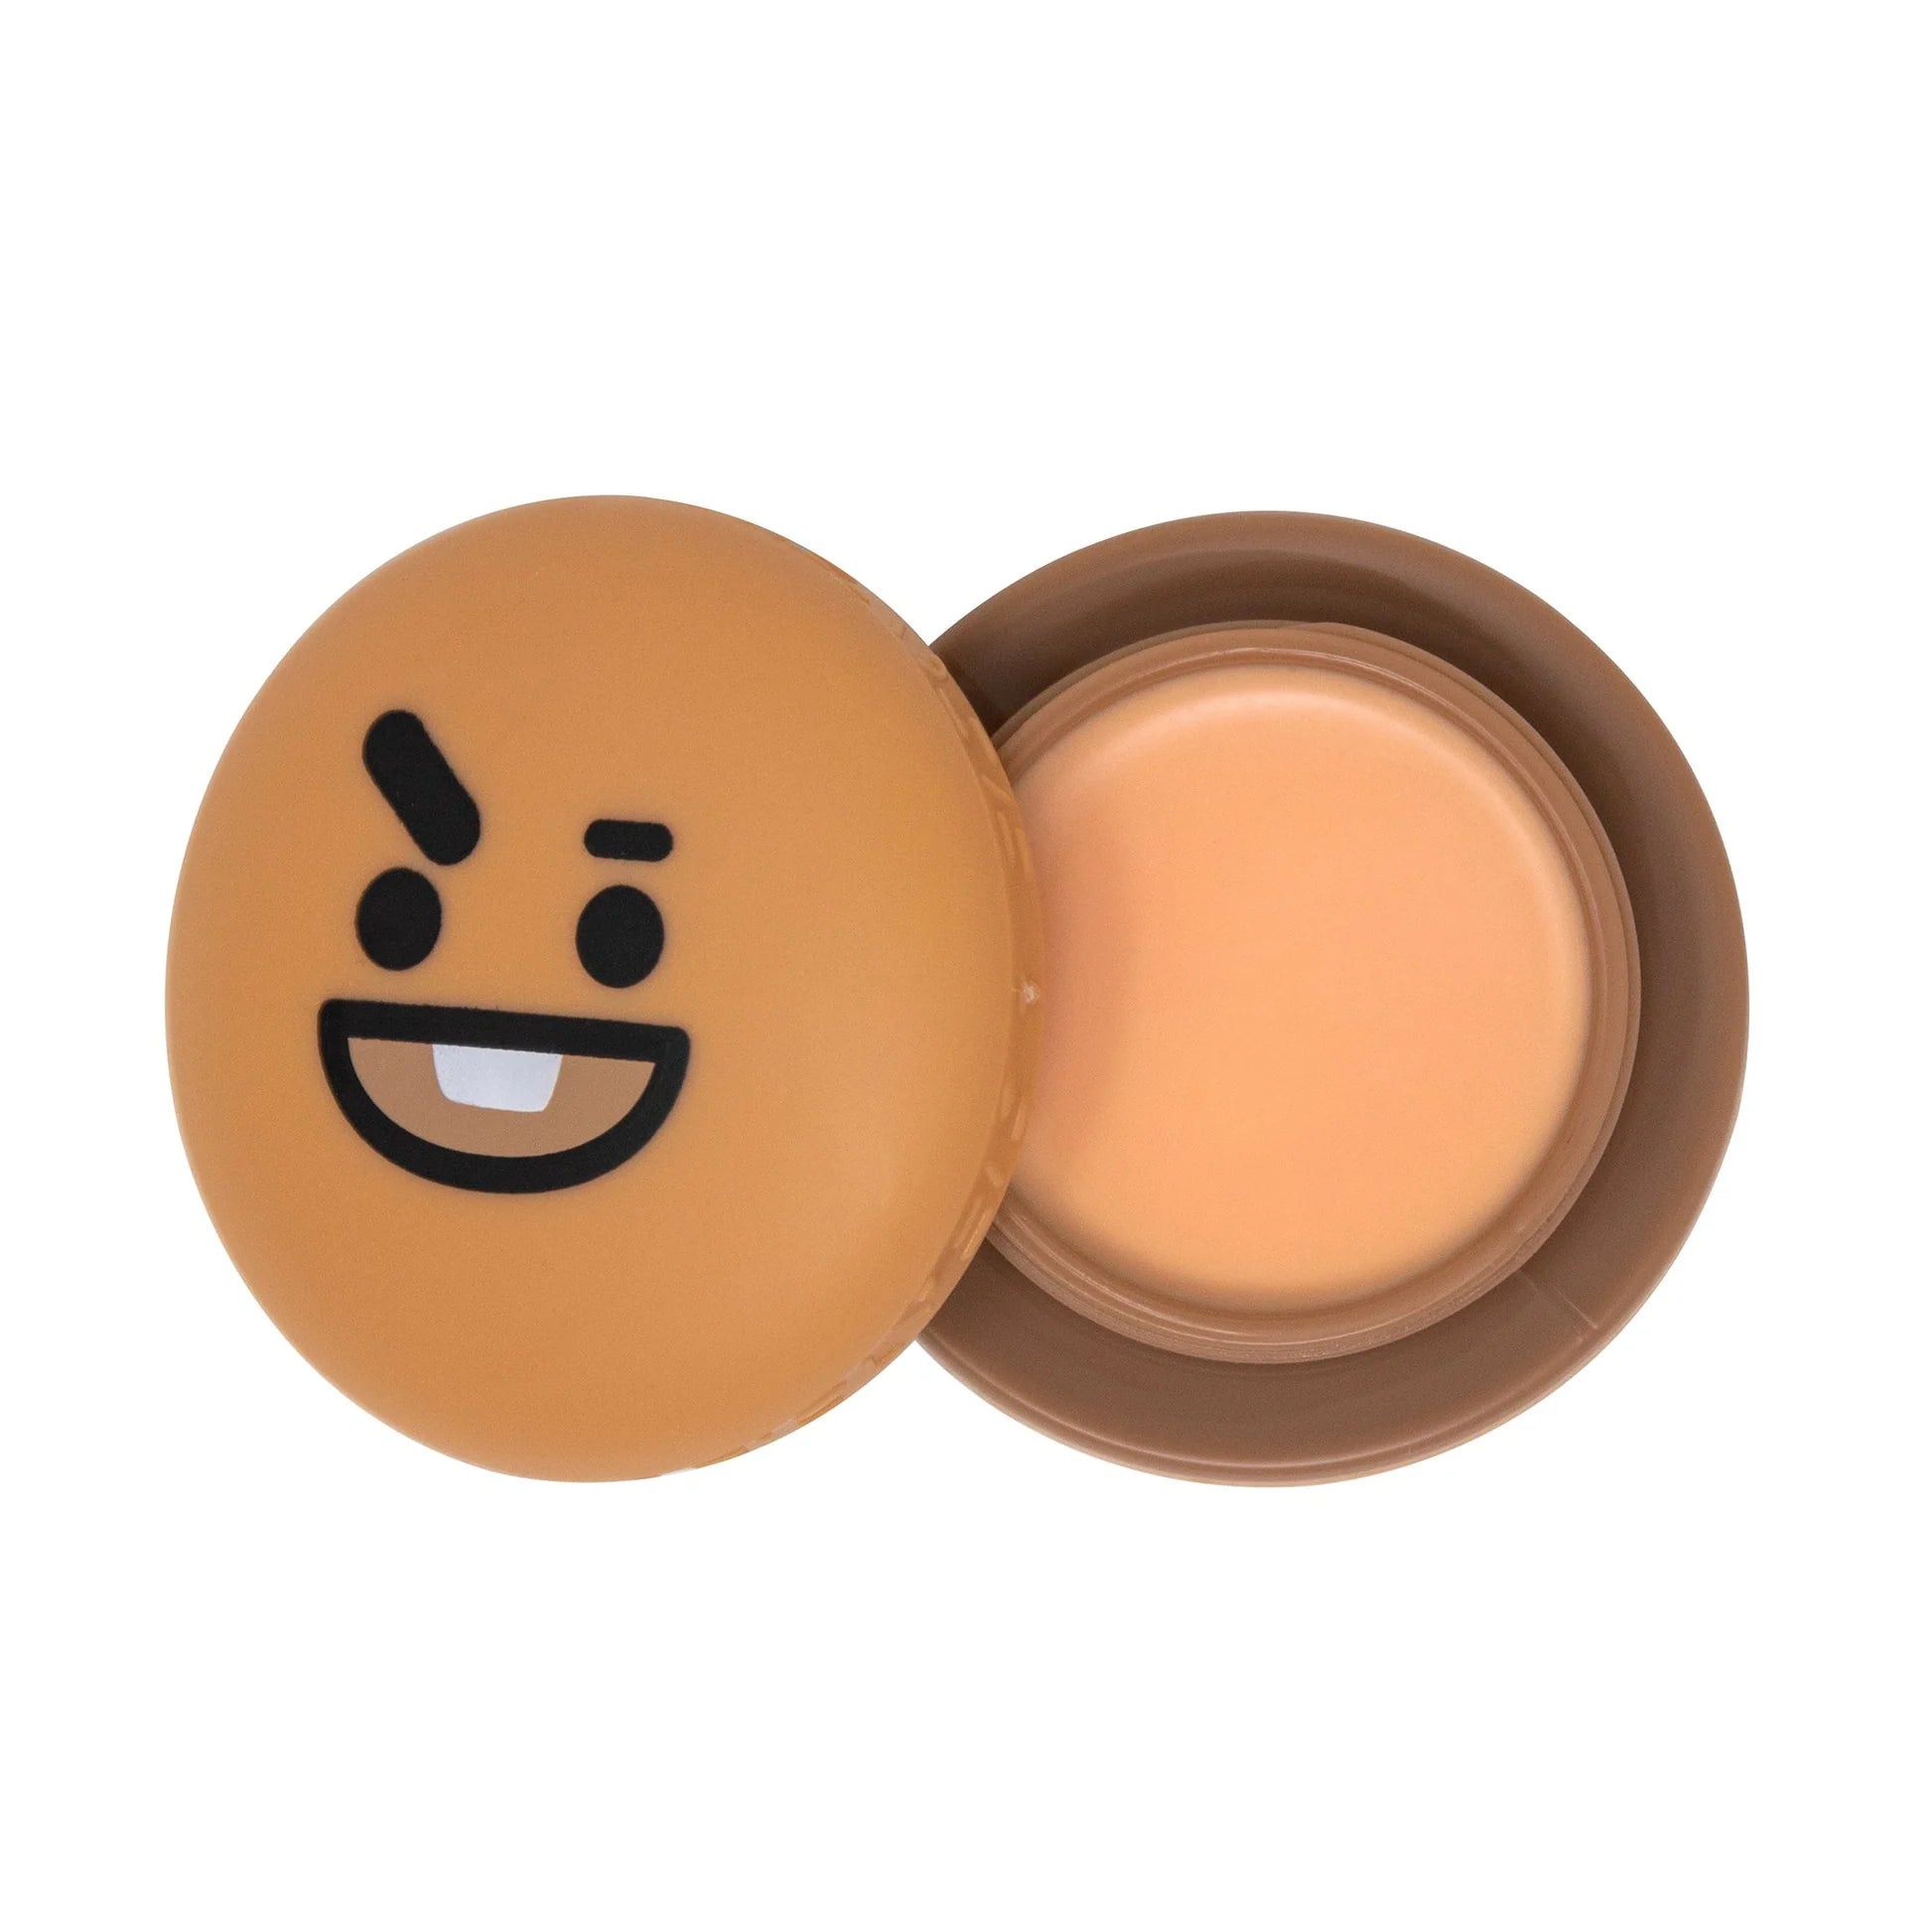 The Creme Shop - BT21 SHOOKY Macaron Lip Balm - Chocolate Crème